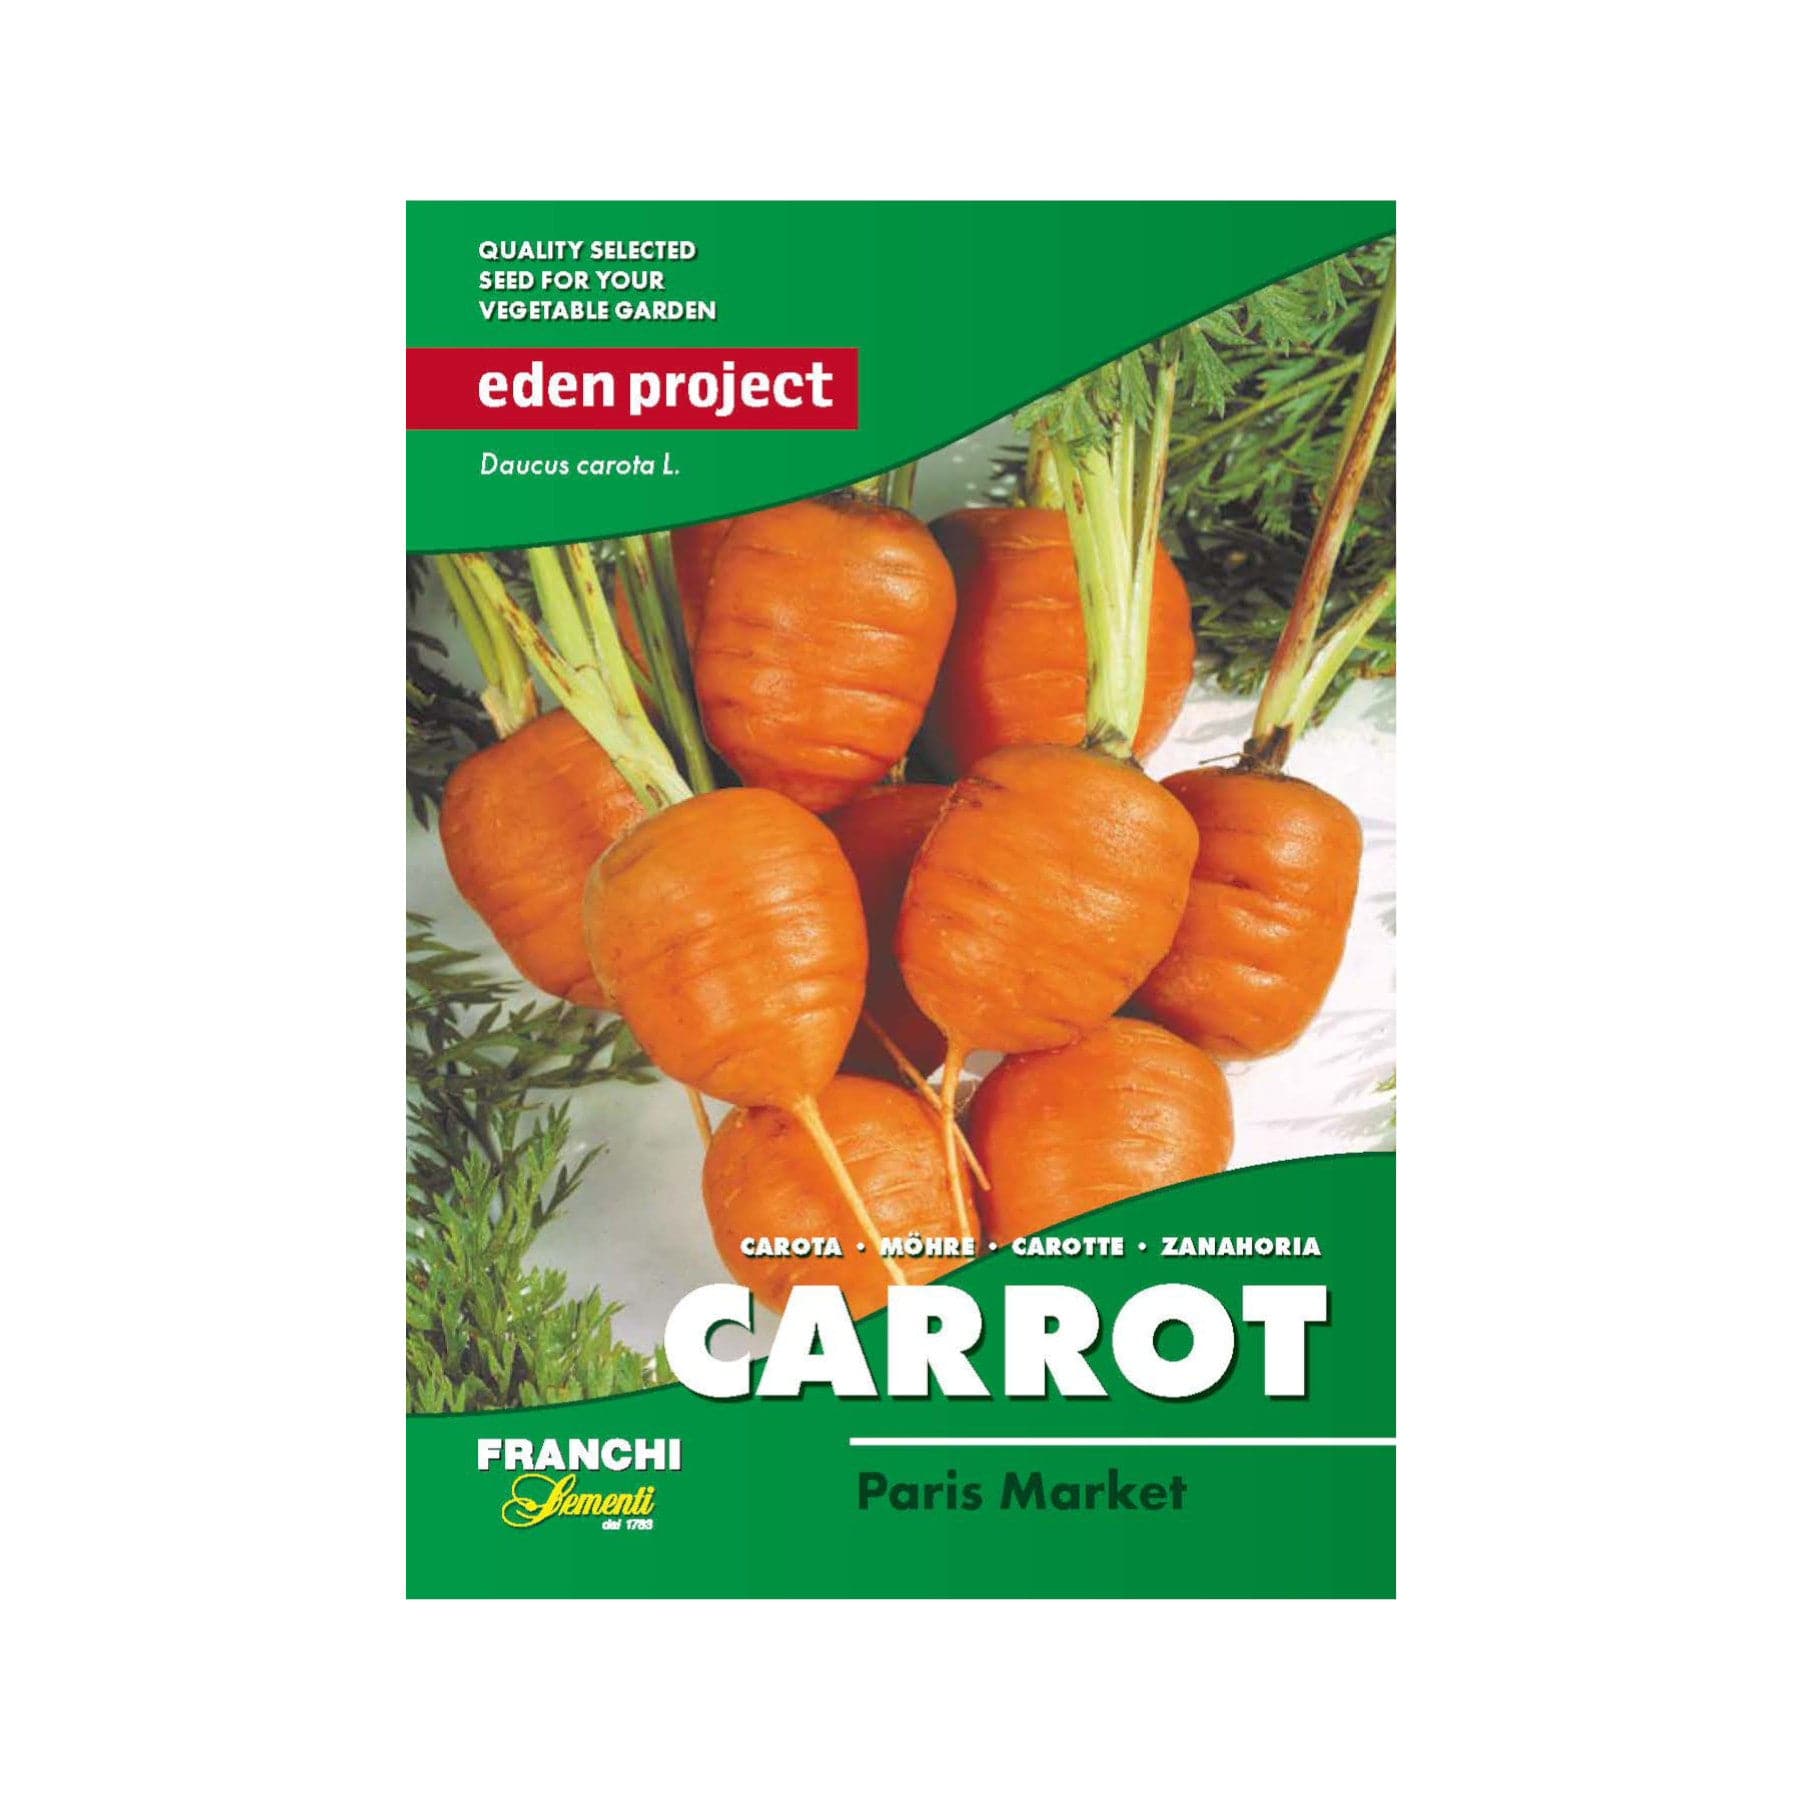 Carrot paris market seeds